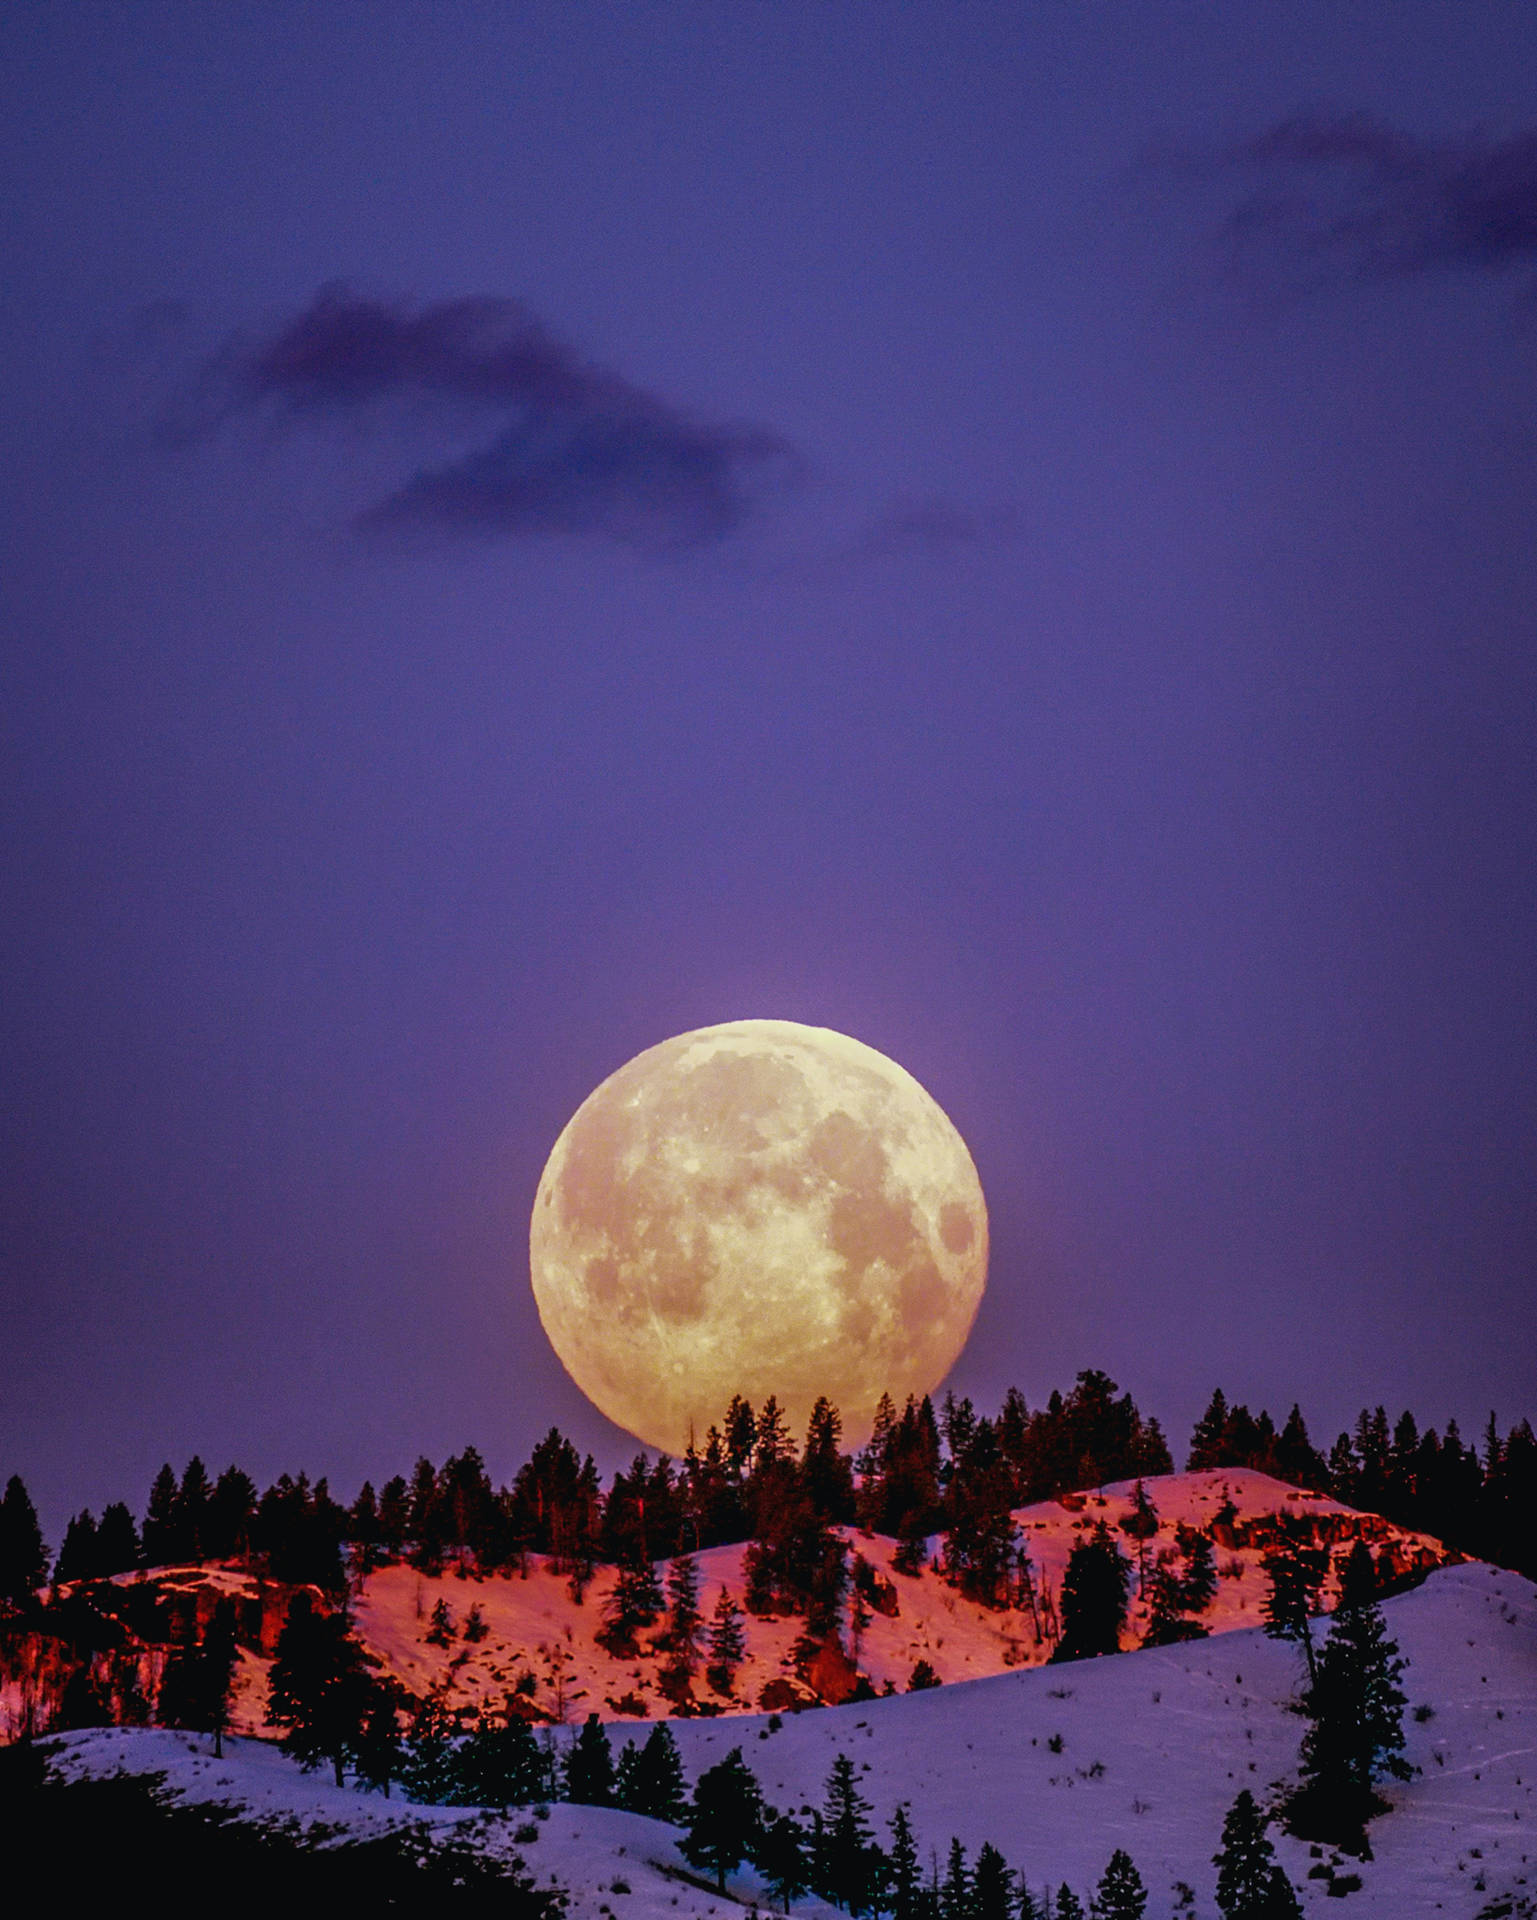 Full Moon Over Snowy Landscape